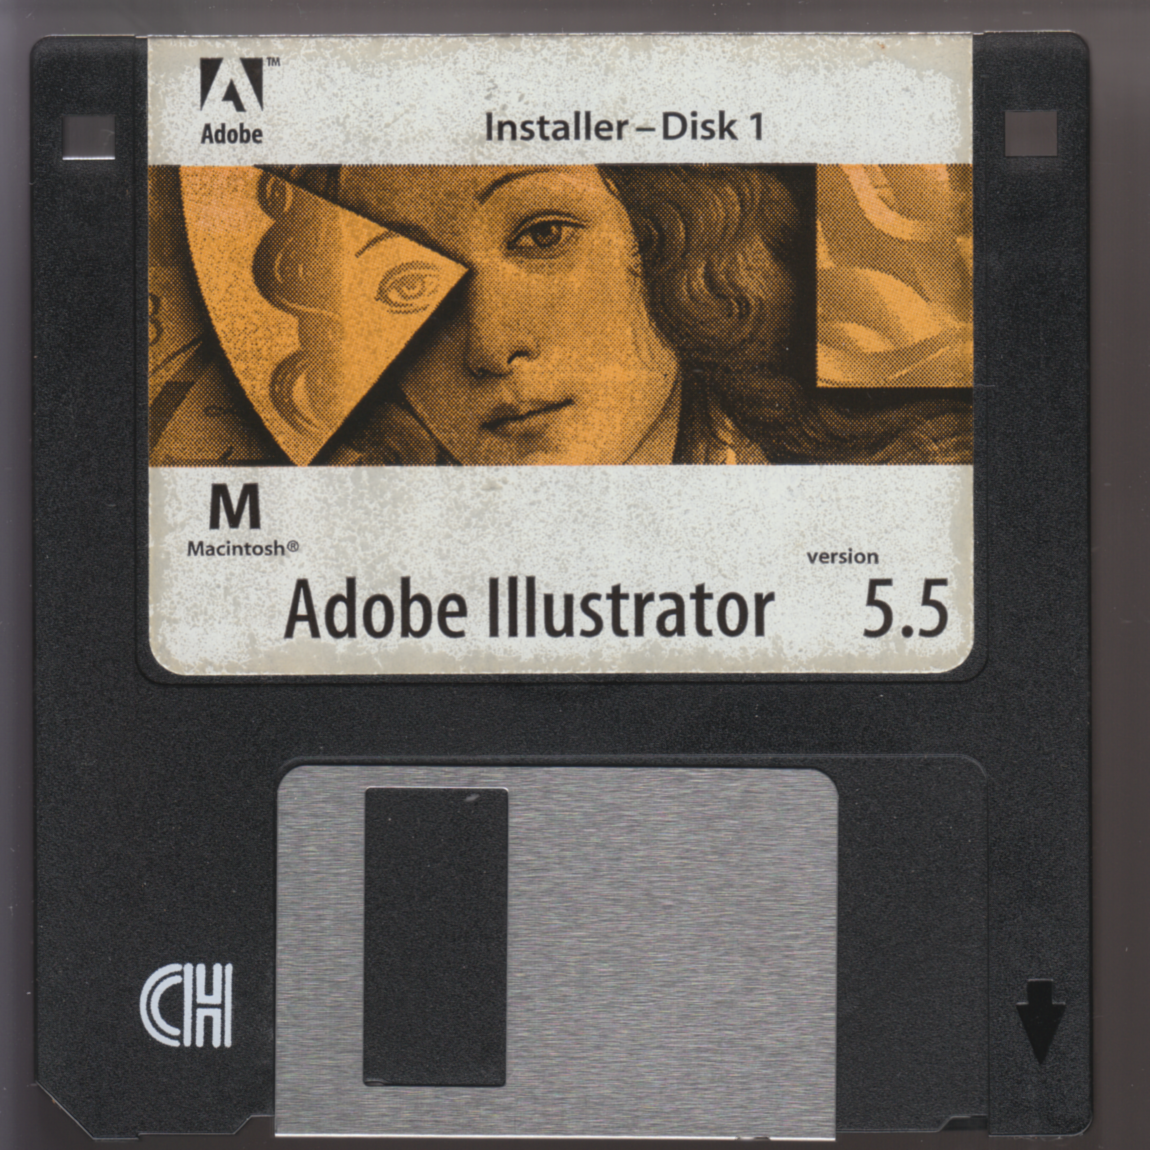 Adobe Illustrator diskette image